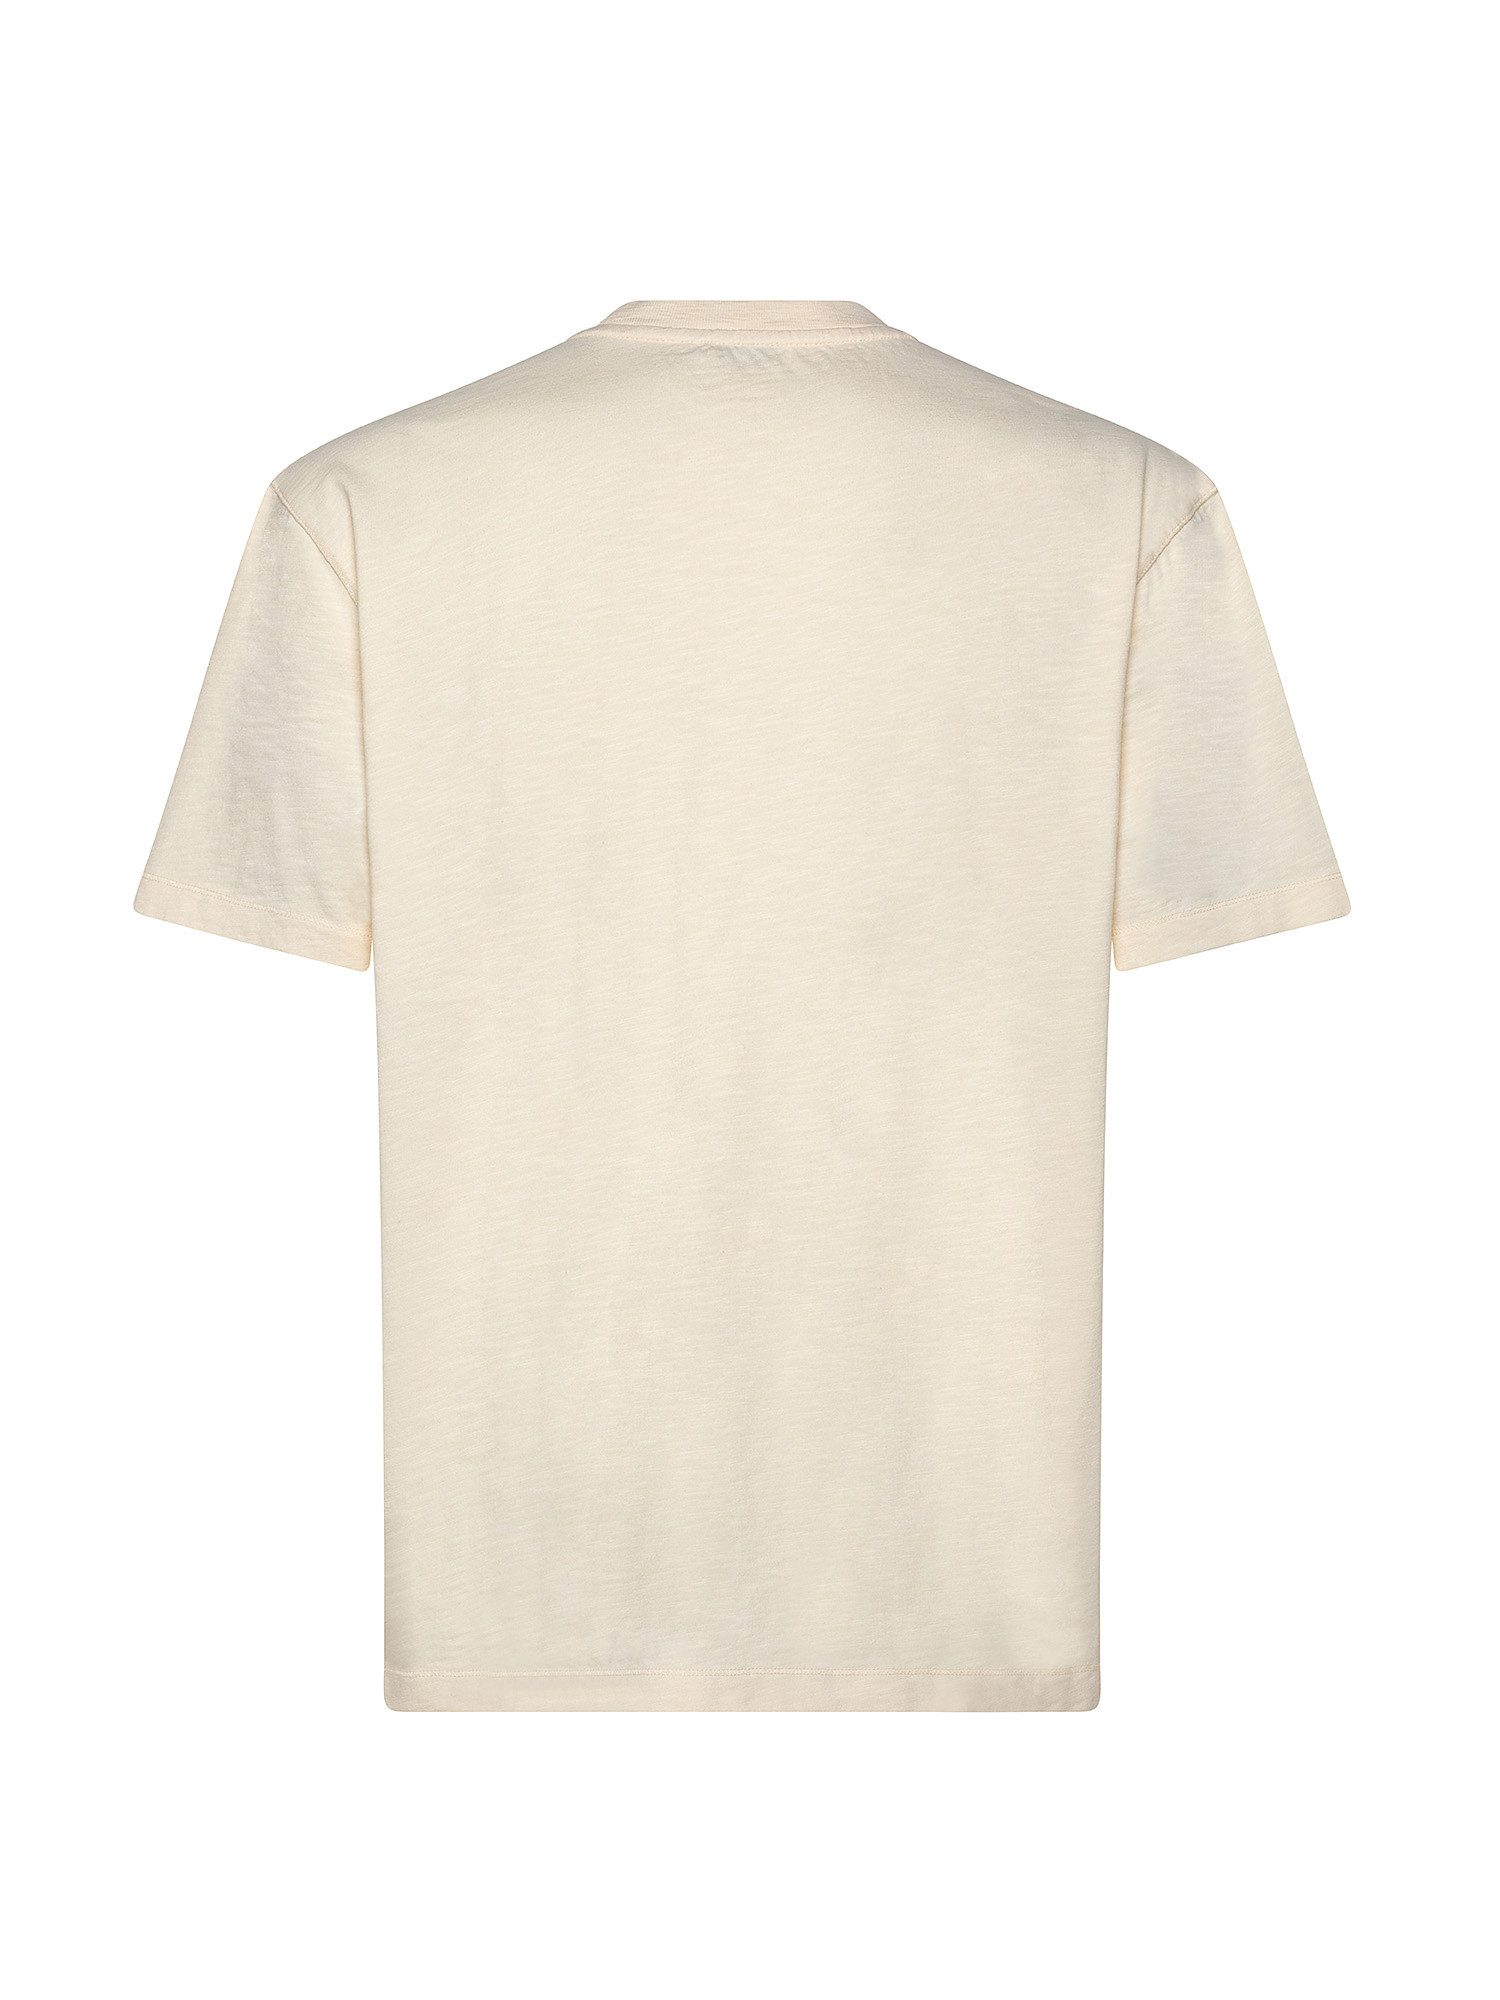 Soft T-Shirt, White Cream, large image number 1